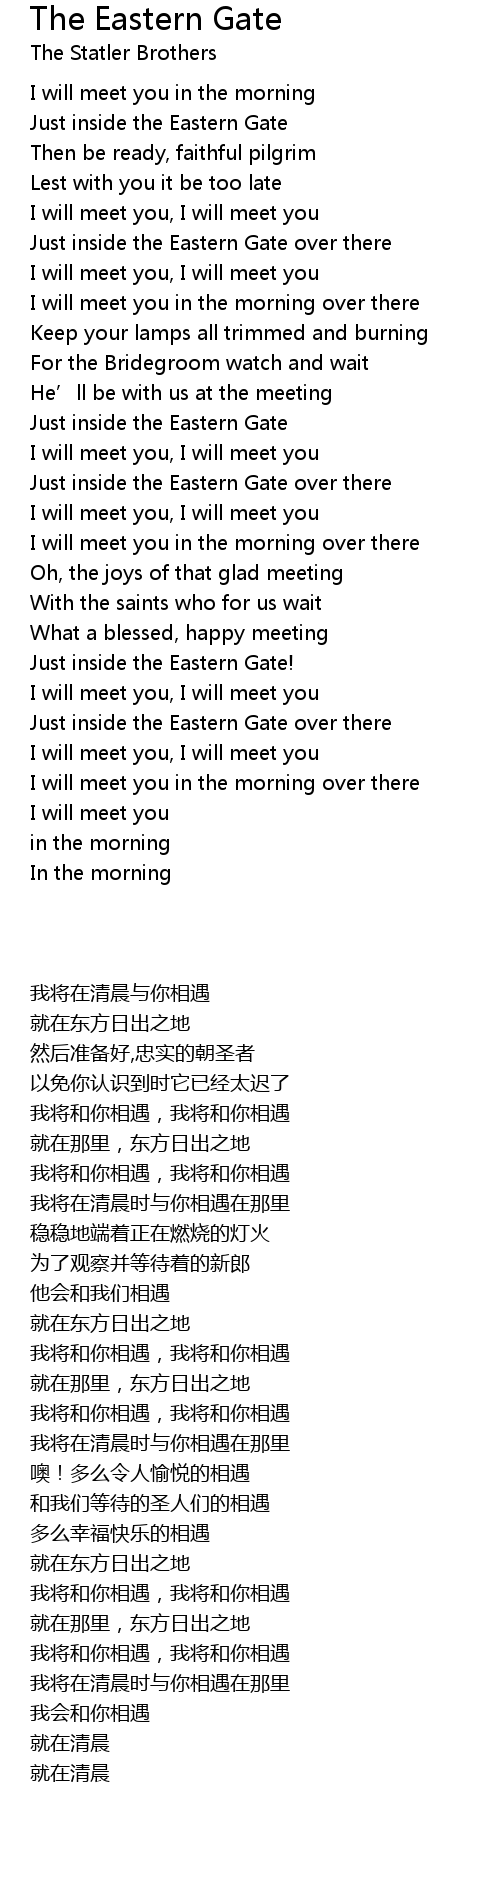 The Eastern Gate Lyrics - Follow Lyrics